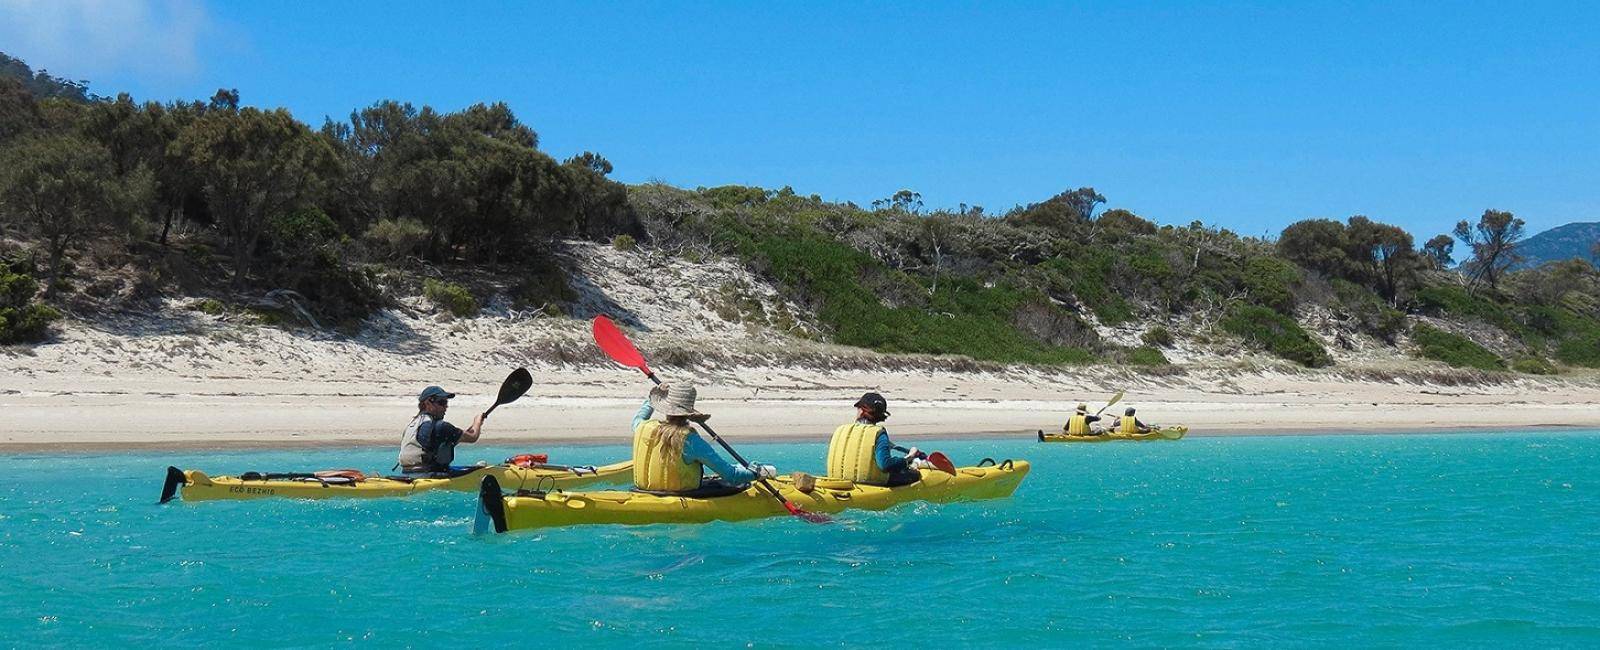 Paddling from beach to beach in Coles Bay, Tasmania | Explore Tasmania's Coles Bay by kayak